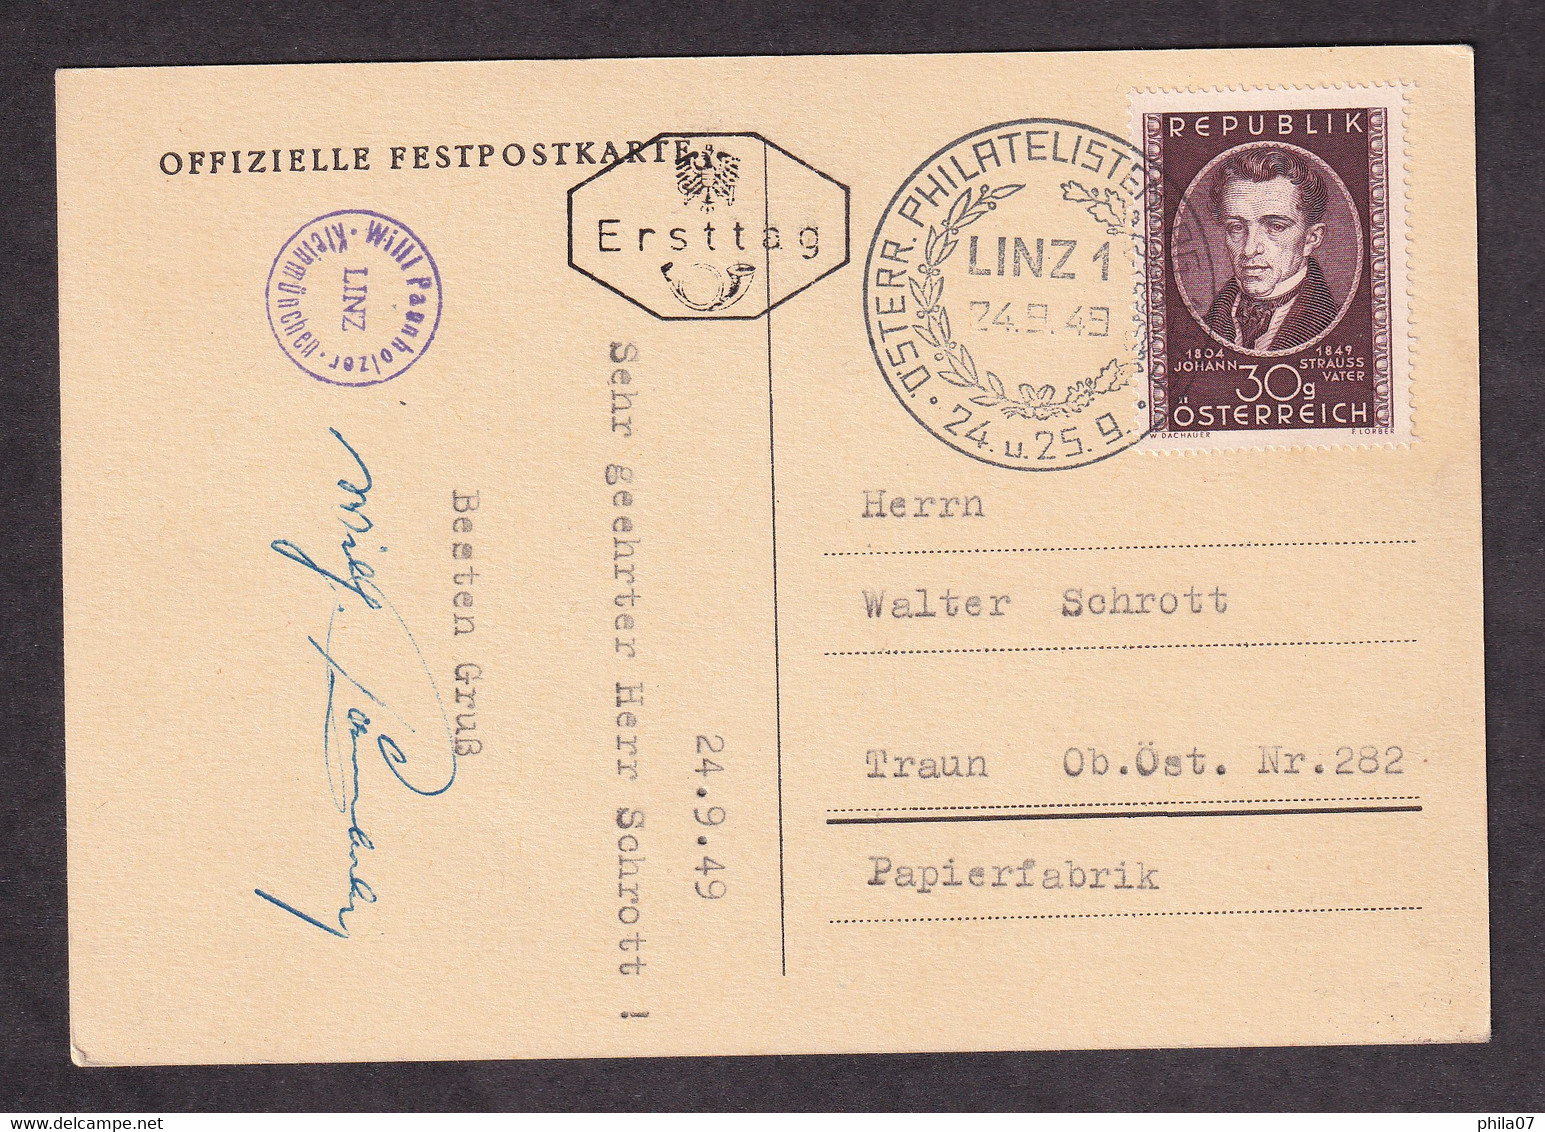 AUSTRIA - Propaganda Card -19. Ost. Philatelistentag Linz A.d. Donau 1949 / 2 Scans - Sonstige & Ohne Zuordnung